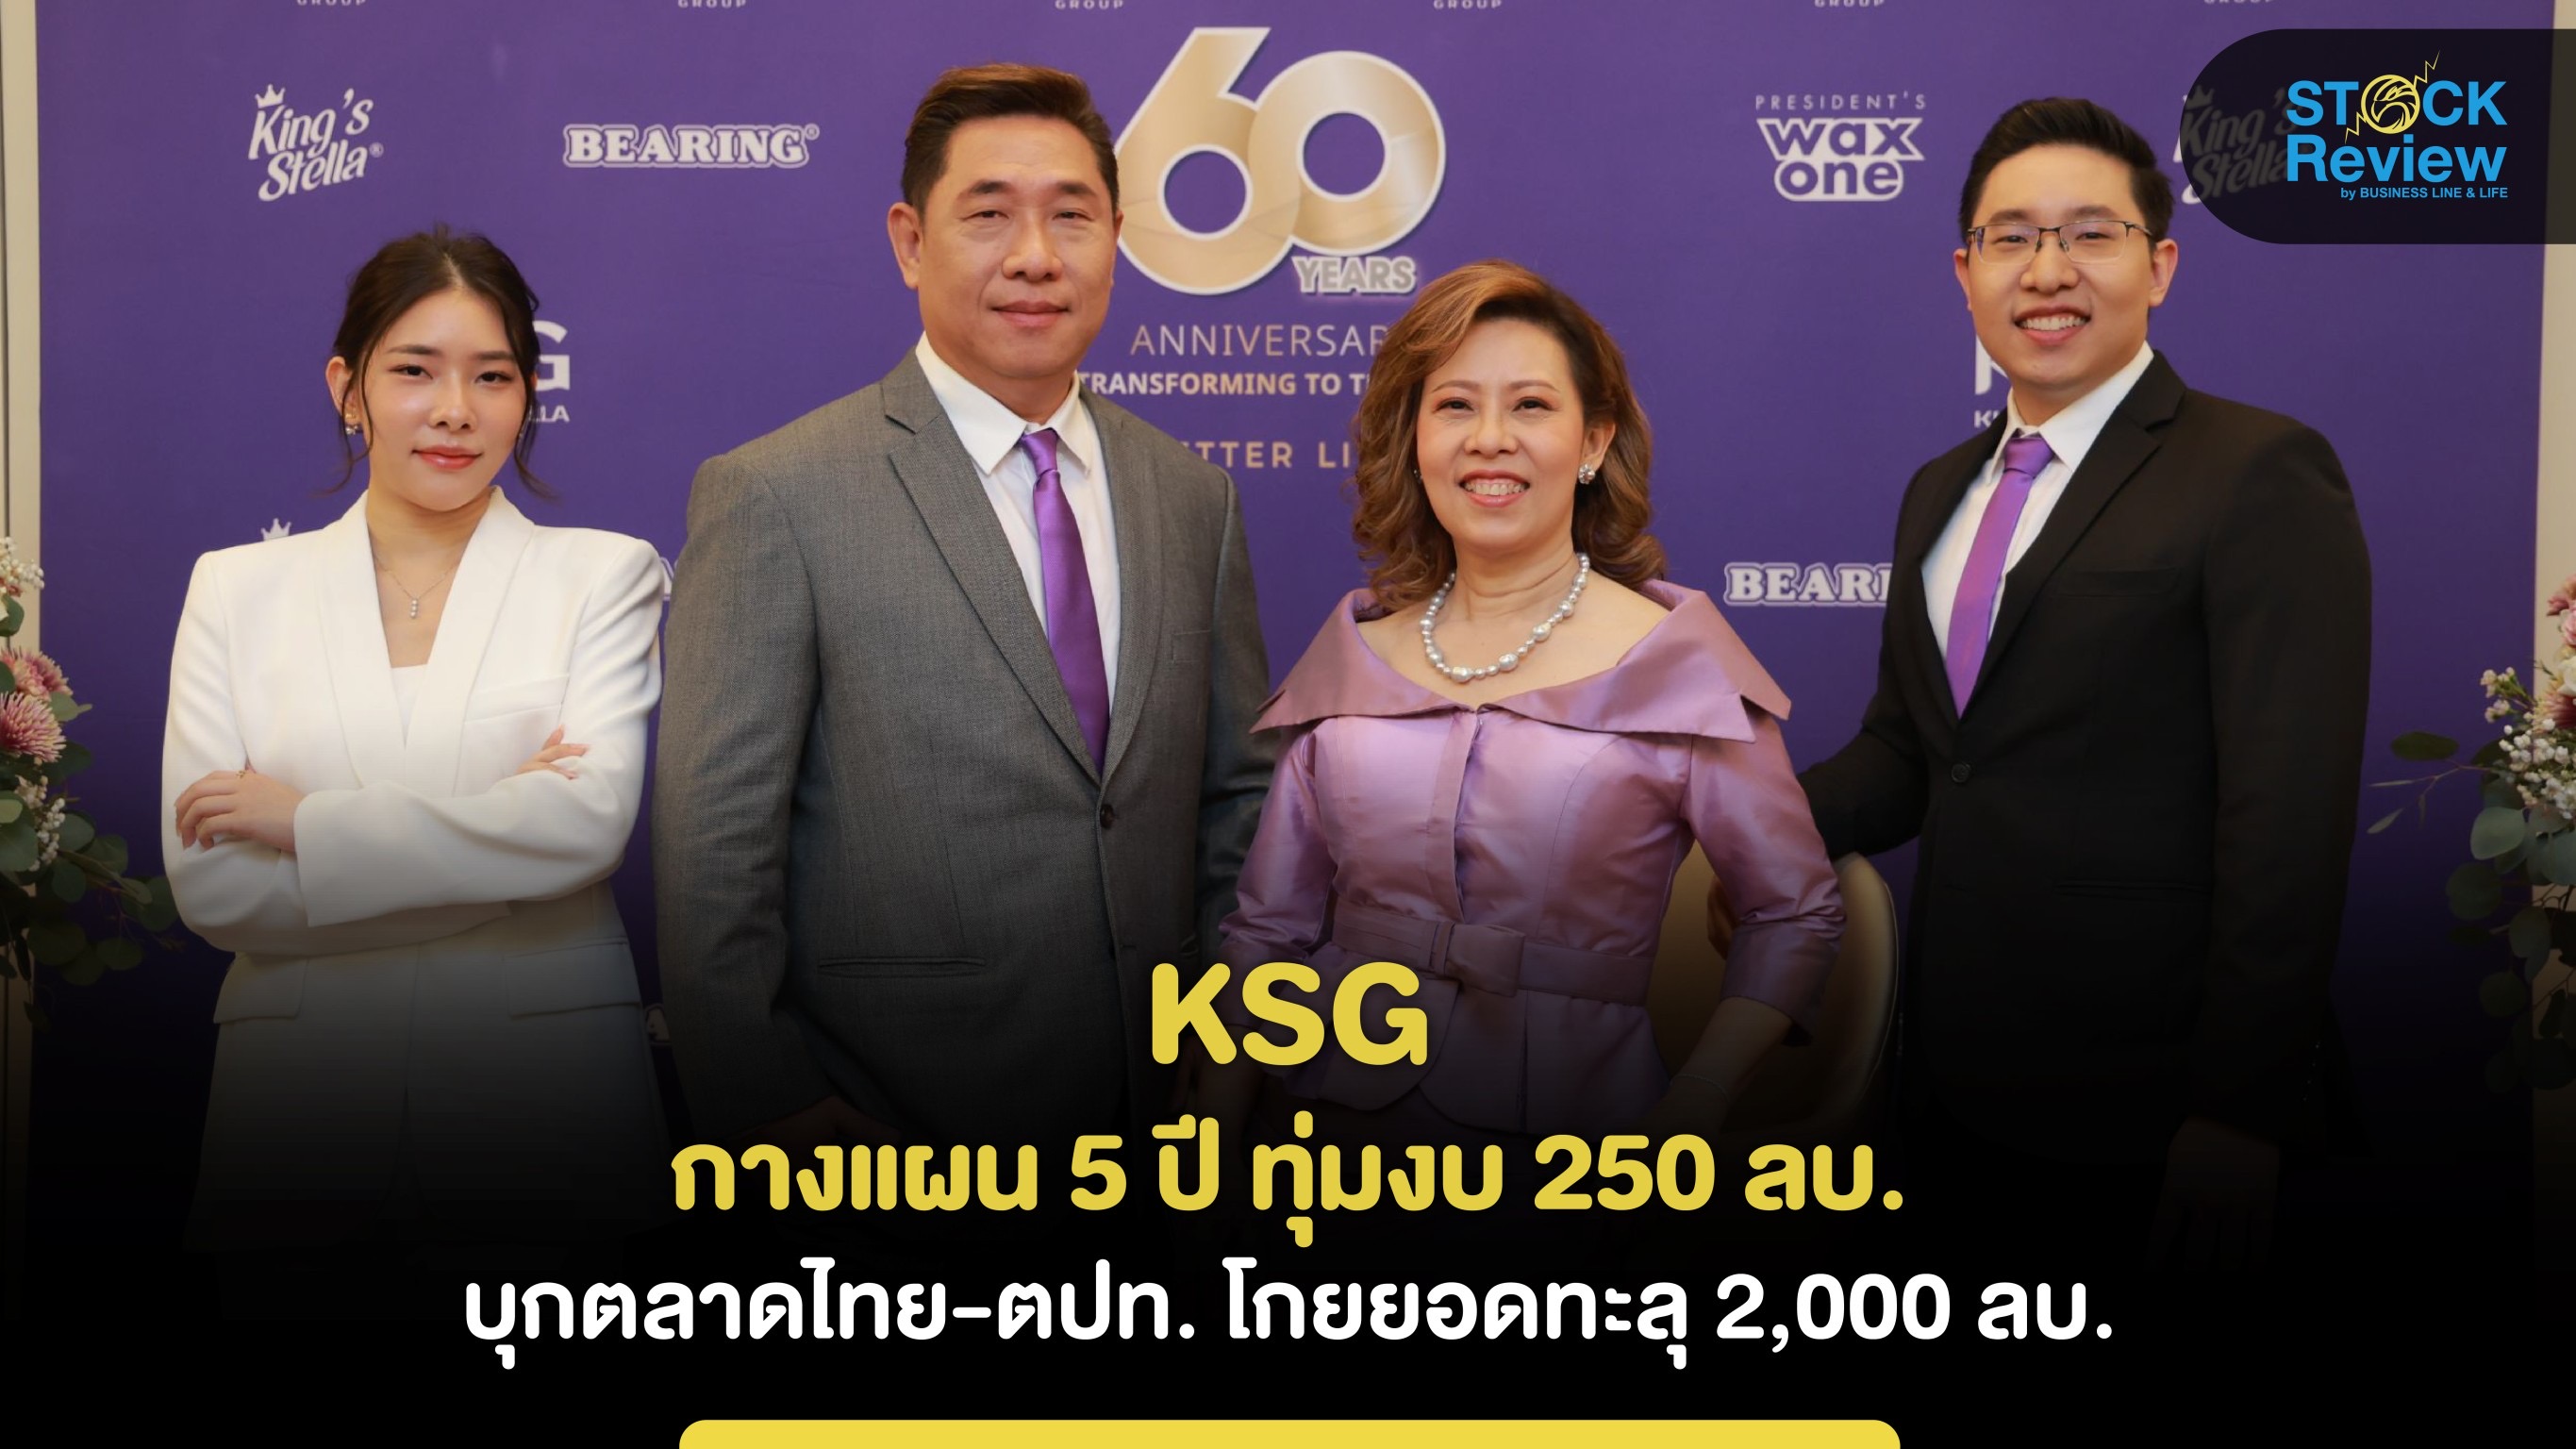 KSG กางแผน 5 ปี ทุ่มงบ 250 ลบ.บุกตลาดไทย-ตปท.